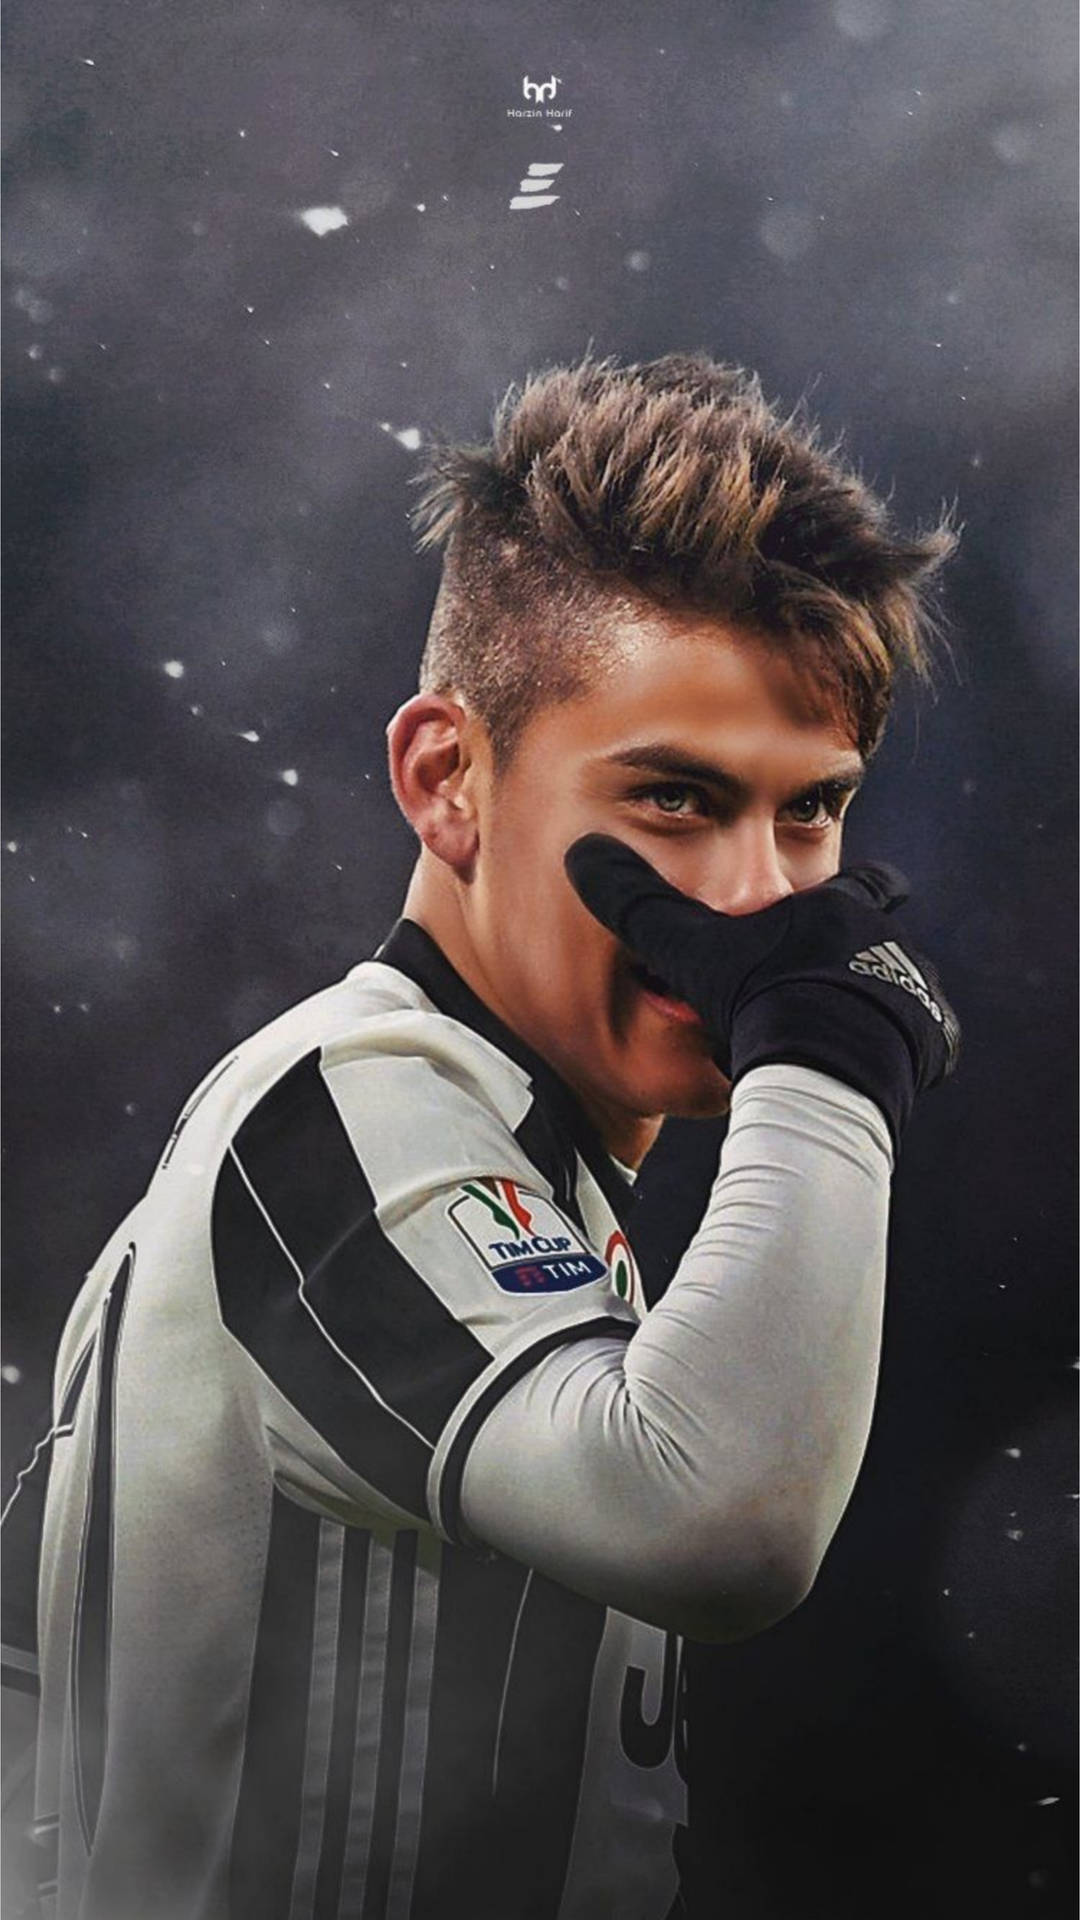 Download Juventus Paulo Dybala's Signature Mask Sign Wallpaper | Wallpapers .com